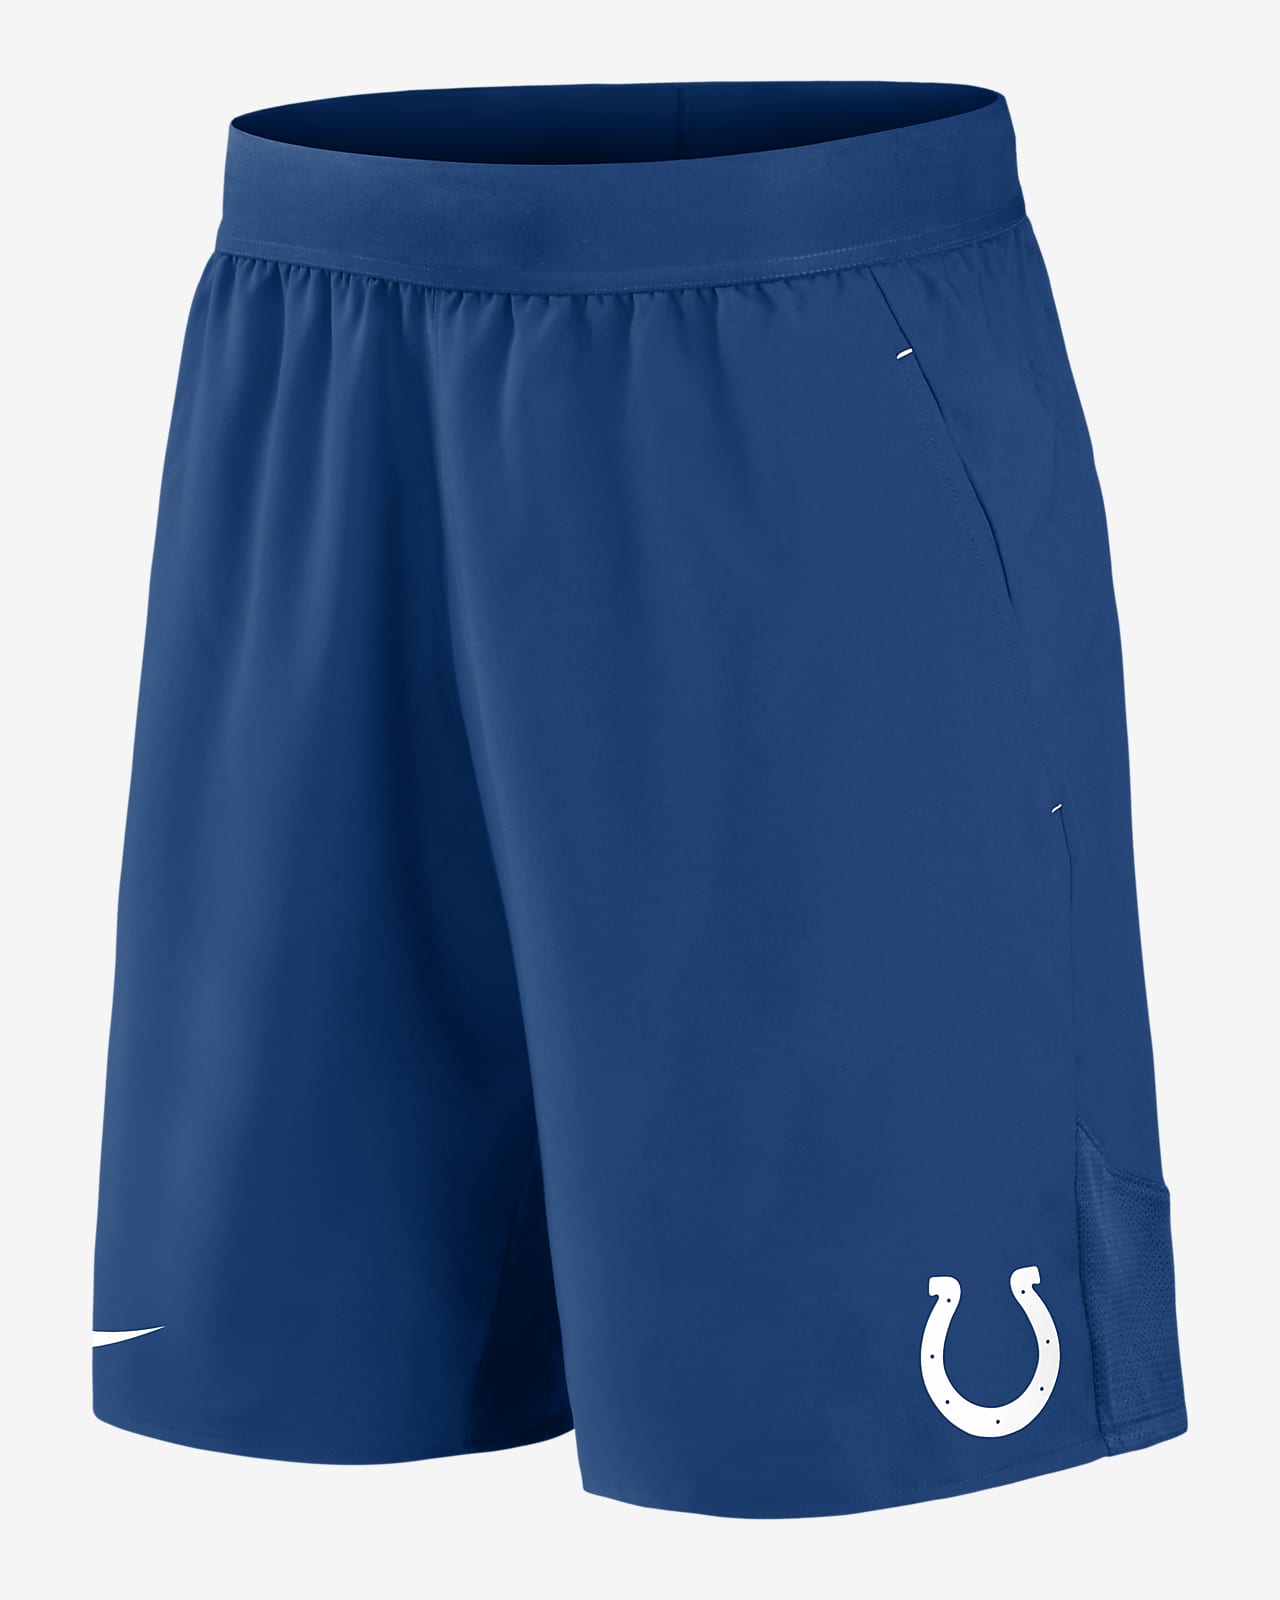 Shorts para hombre Nike Dri-FIT Stretch (NFL Indianapolis Colts)